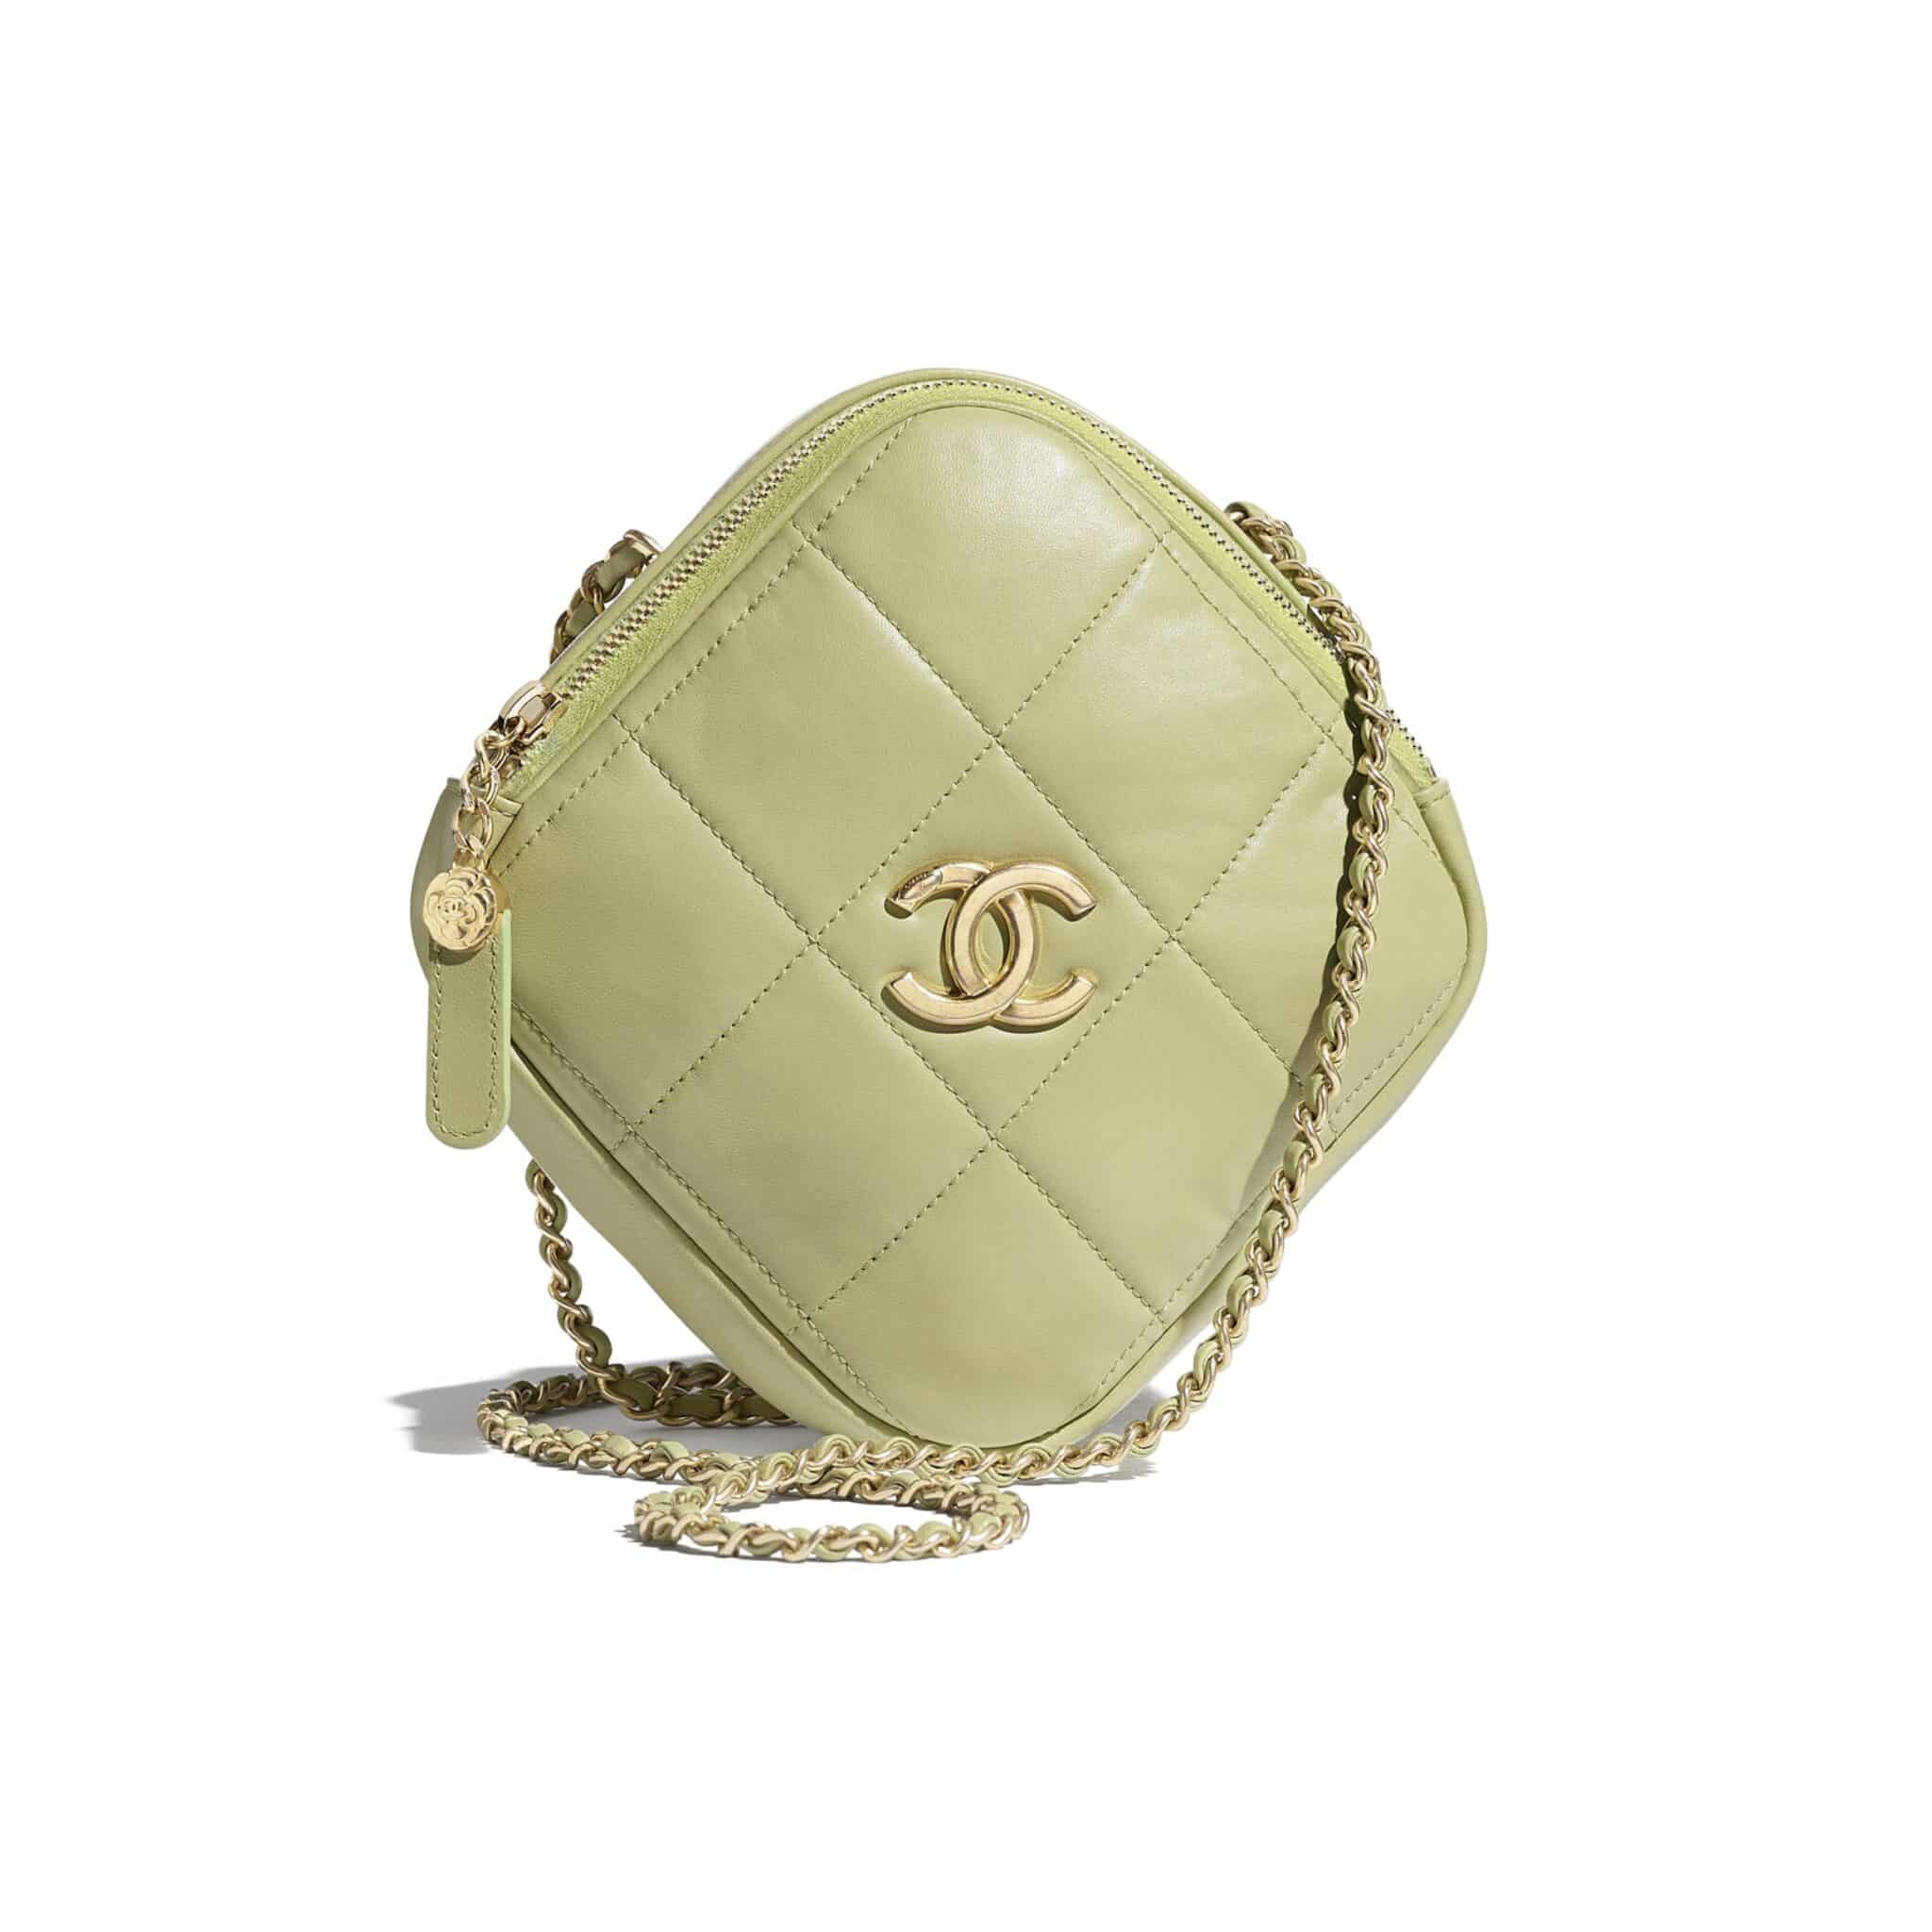 A peek into Chanel's Fall 2020 Handbag collection.